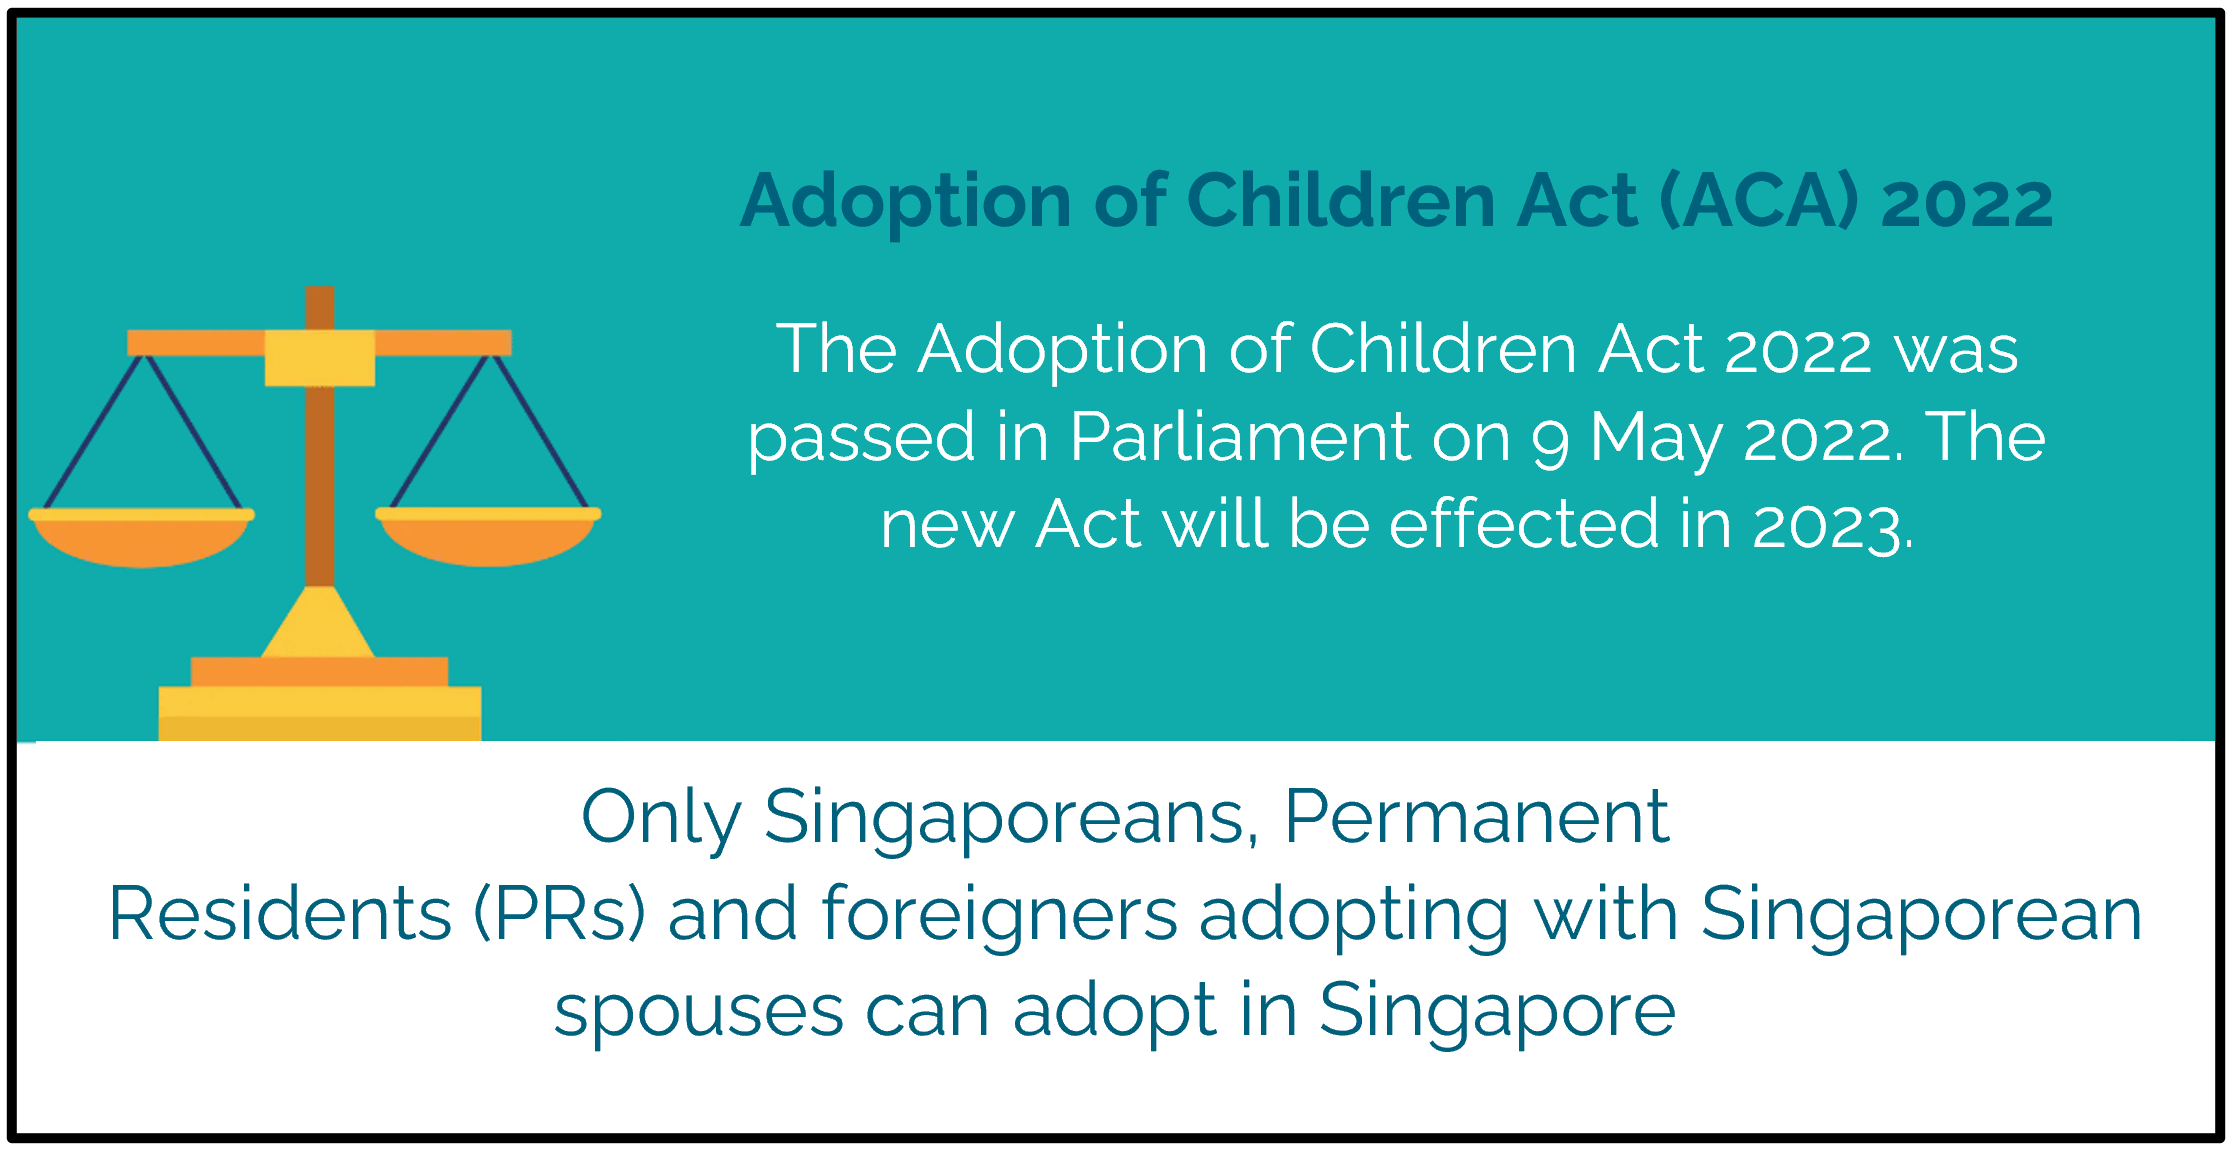 Adoption of Children Act image